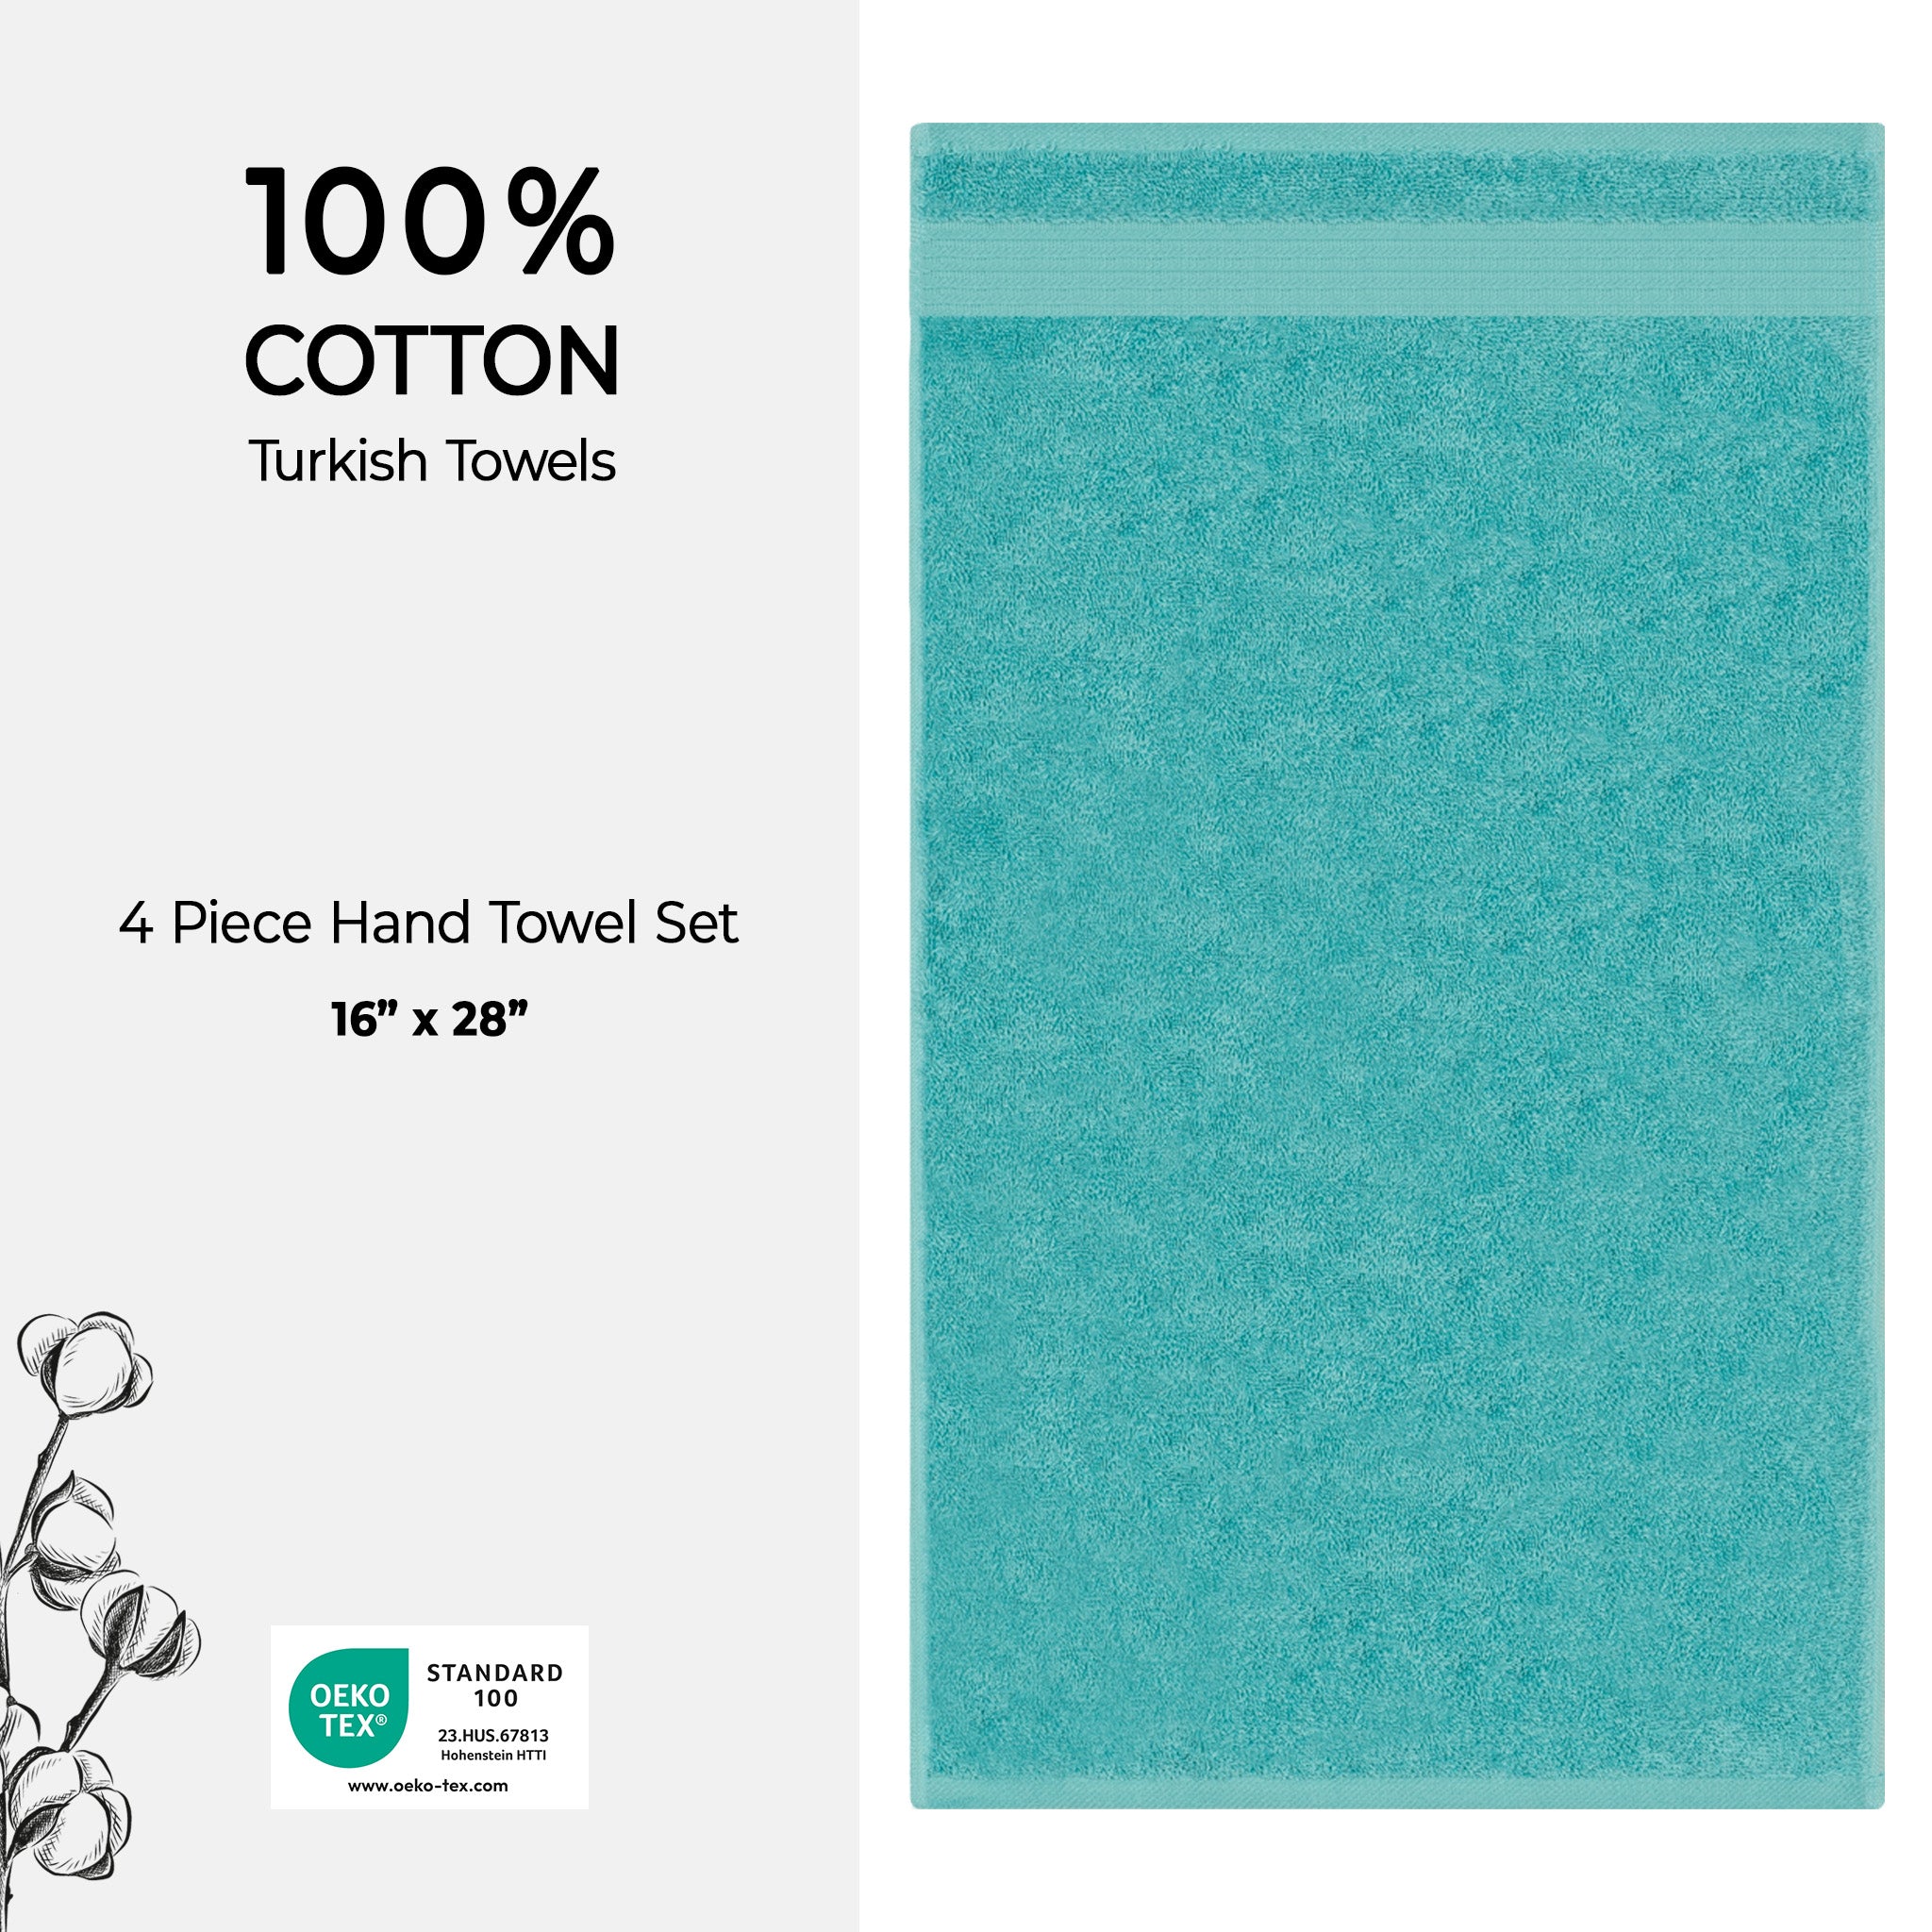 American Soft Linen Bekos 100% Cotton Turkish Towels, 4 Piece Hand Towel Set -turquoise-blue-04